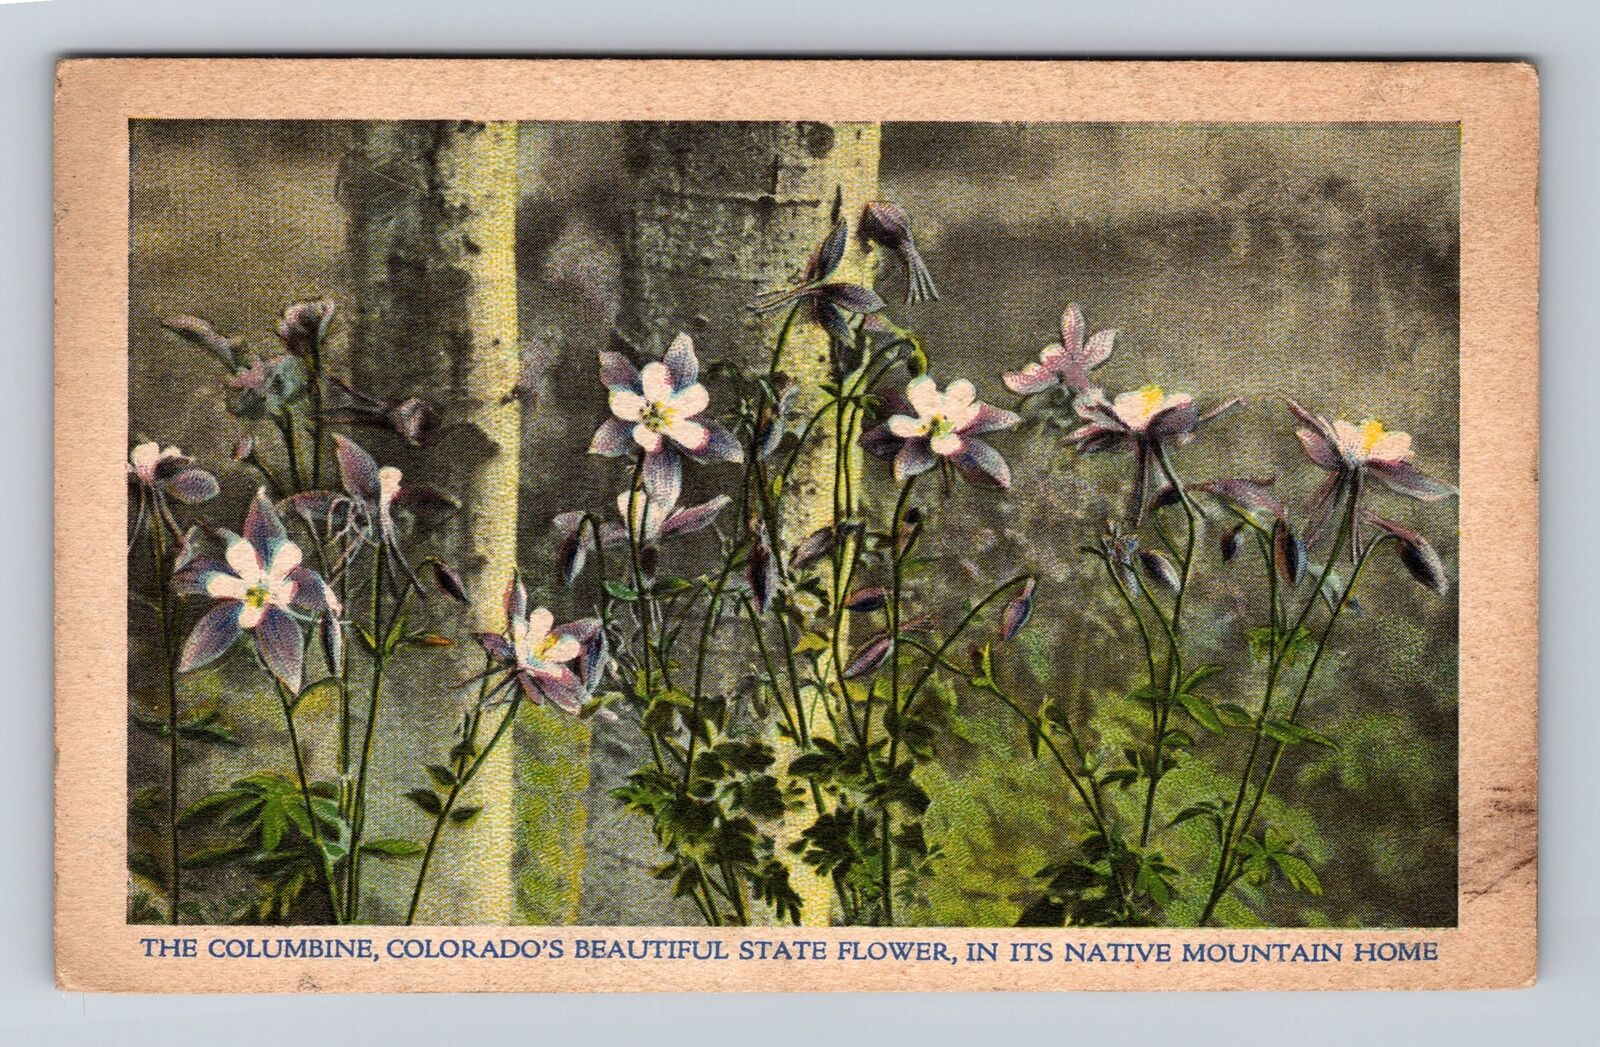 CO-Colorado, Colorado State Flower the Columbine, Vintage c1932 Postcard